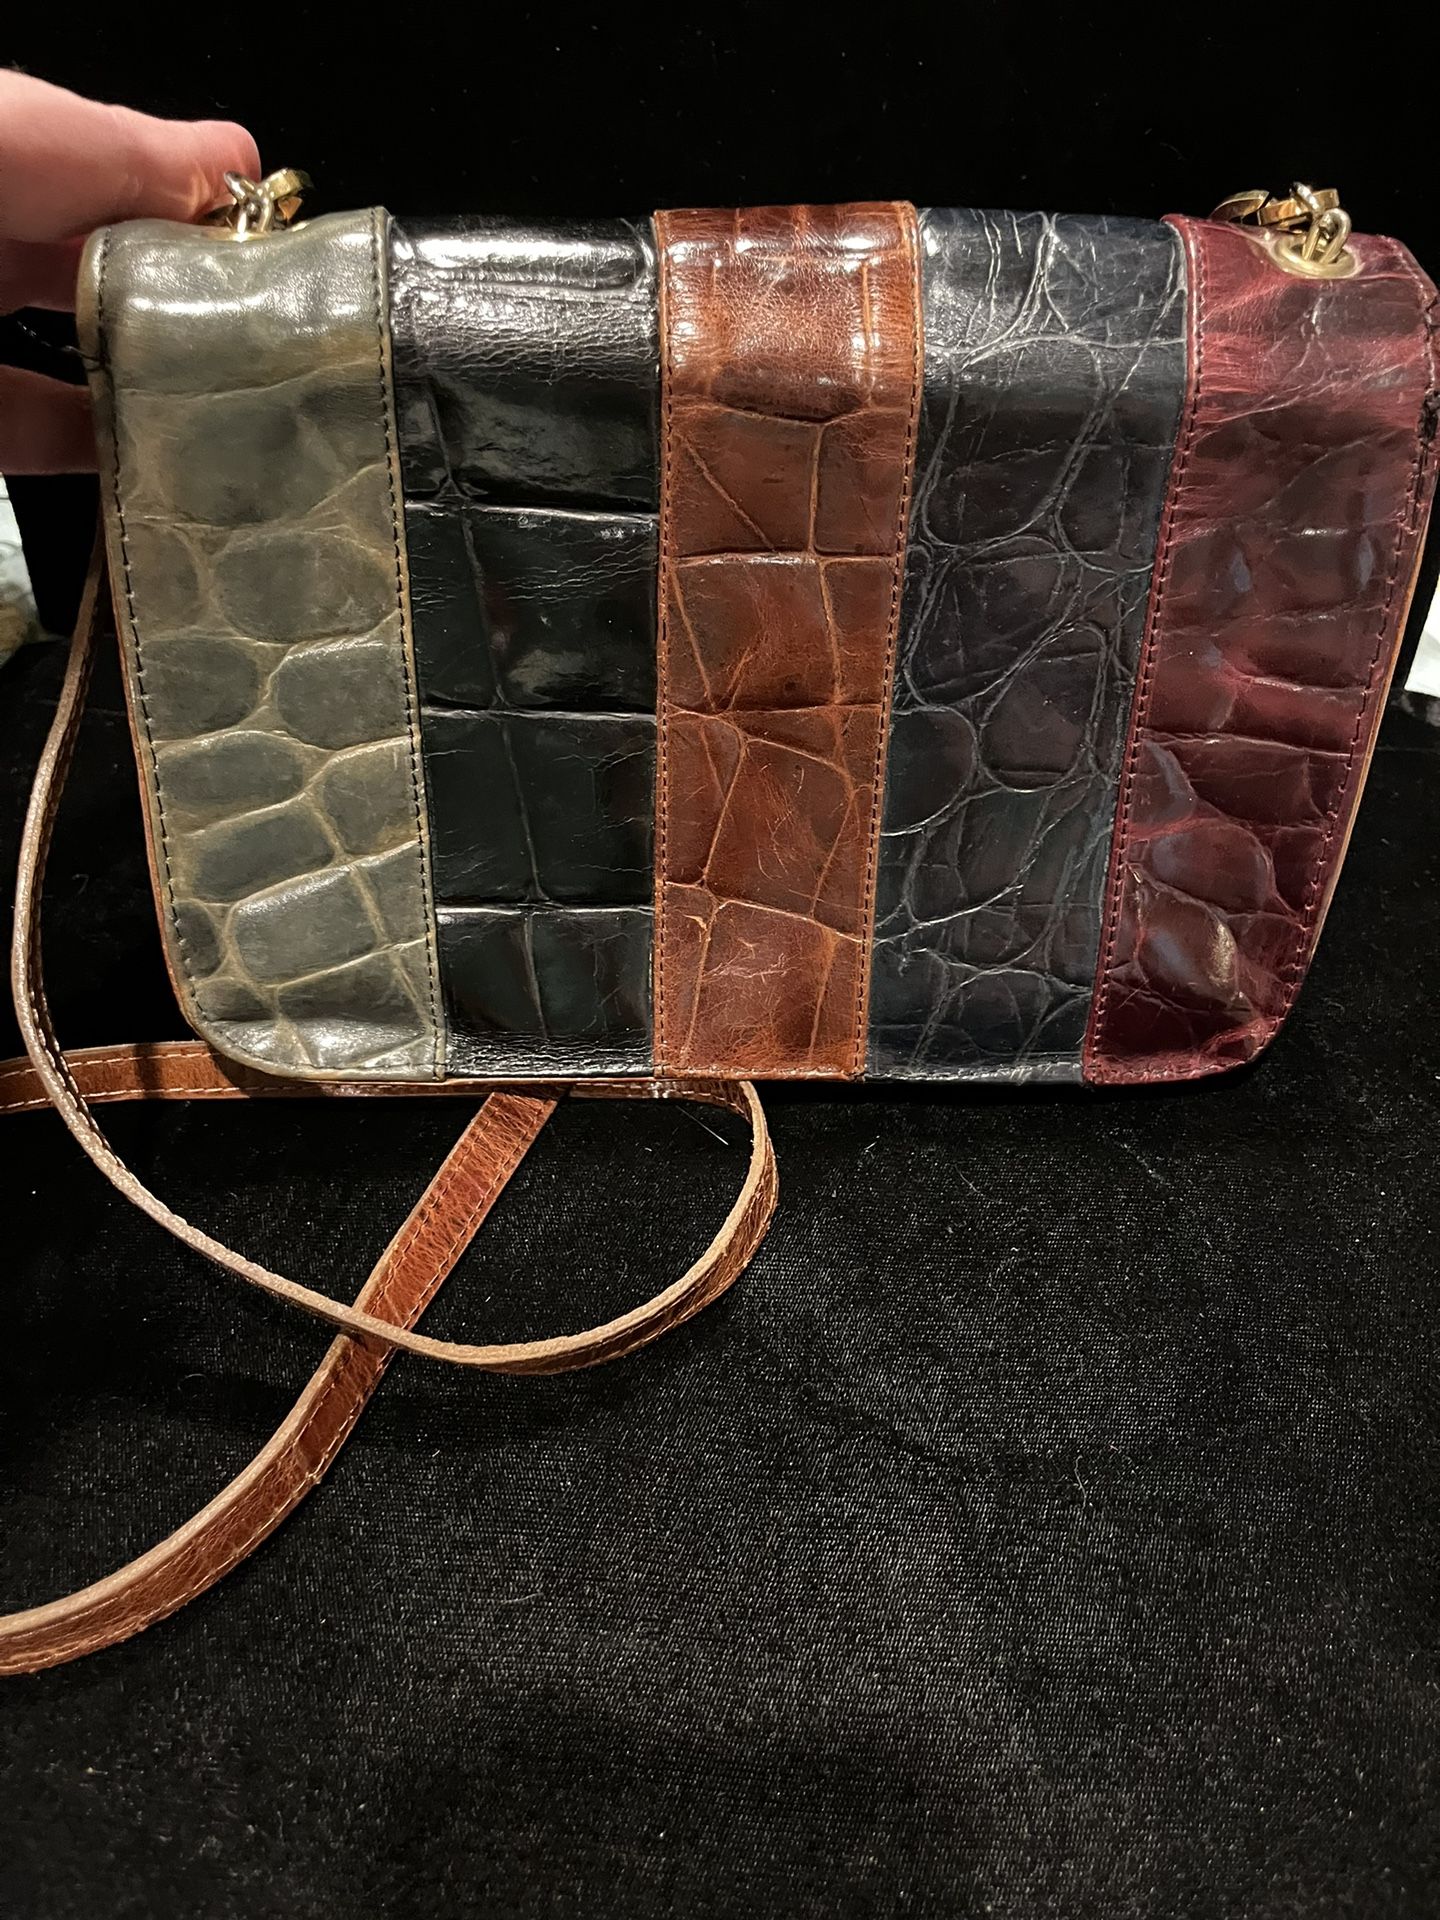 AlligatorShoulder bag, multicolor, soft leather strap gold chain excellent condition